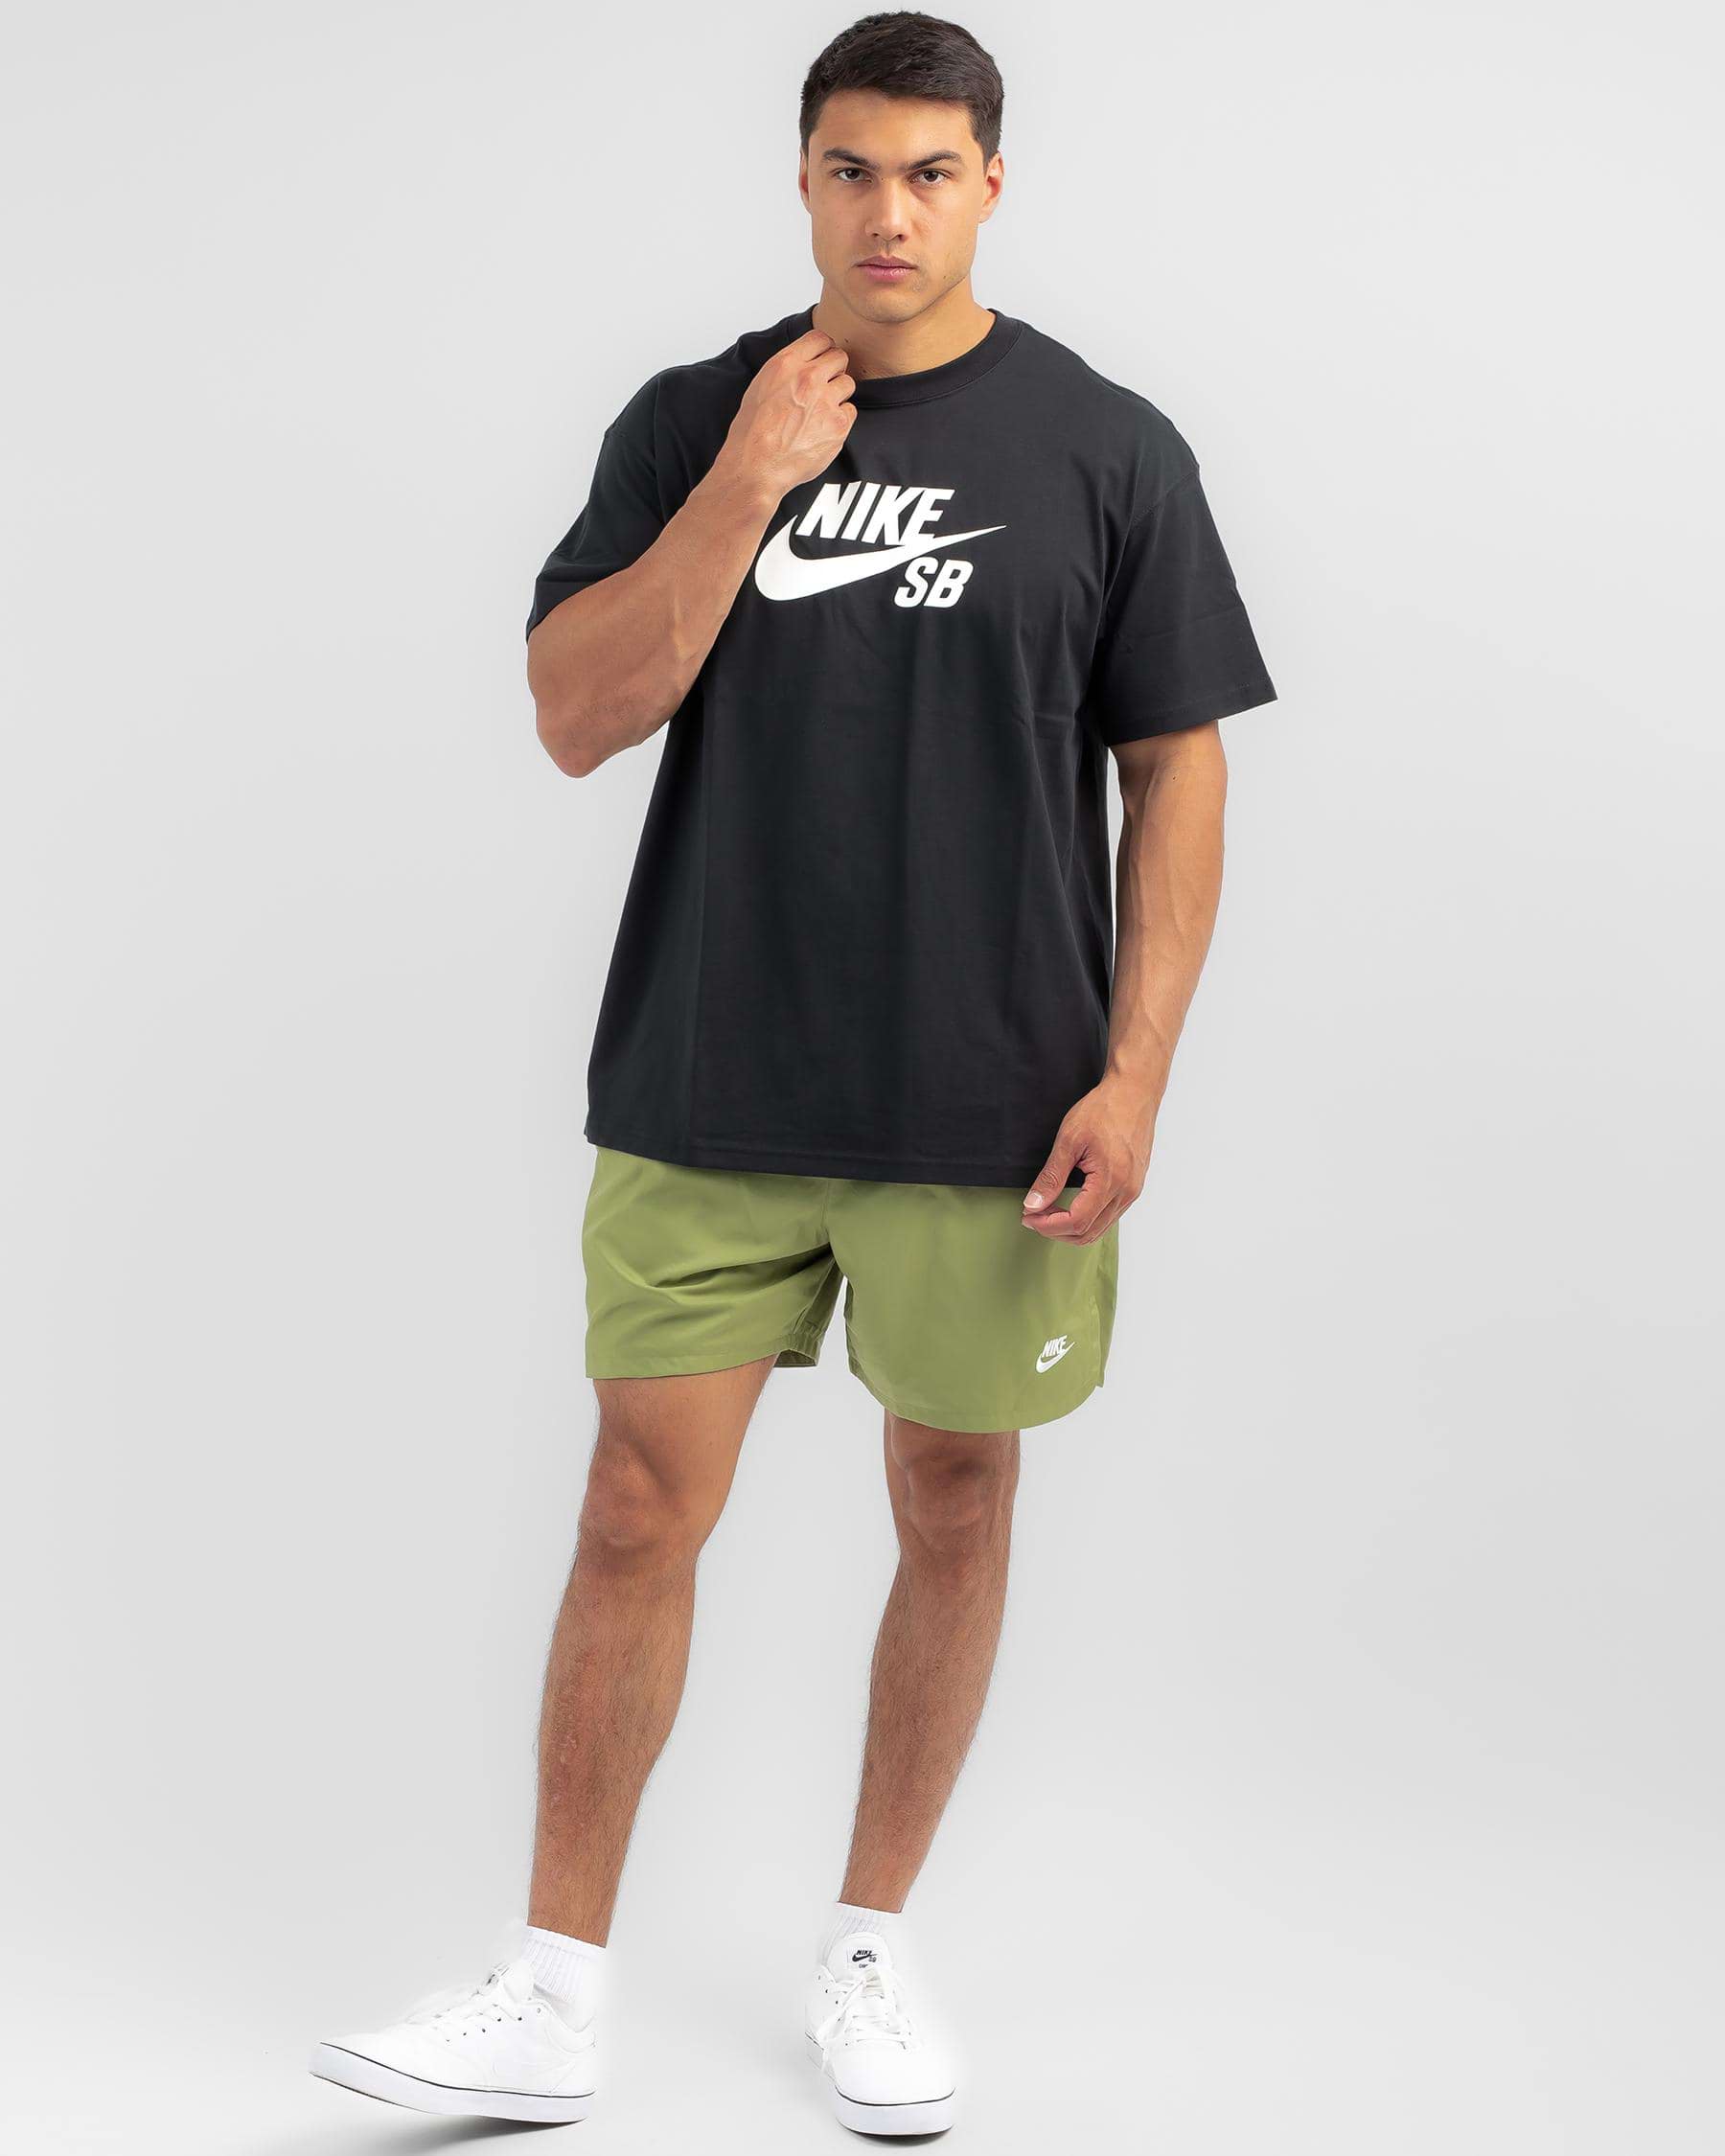 Shop Nike SB Logo T-Shirt In Black - Fast Shipping & Easy Returns ...